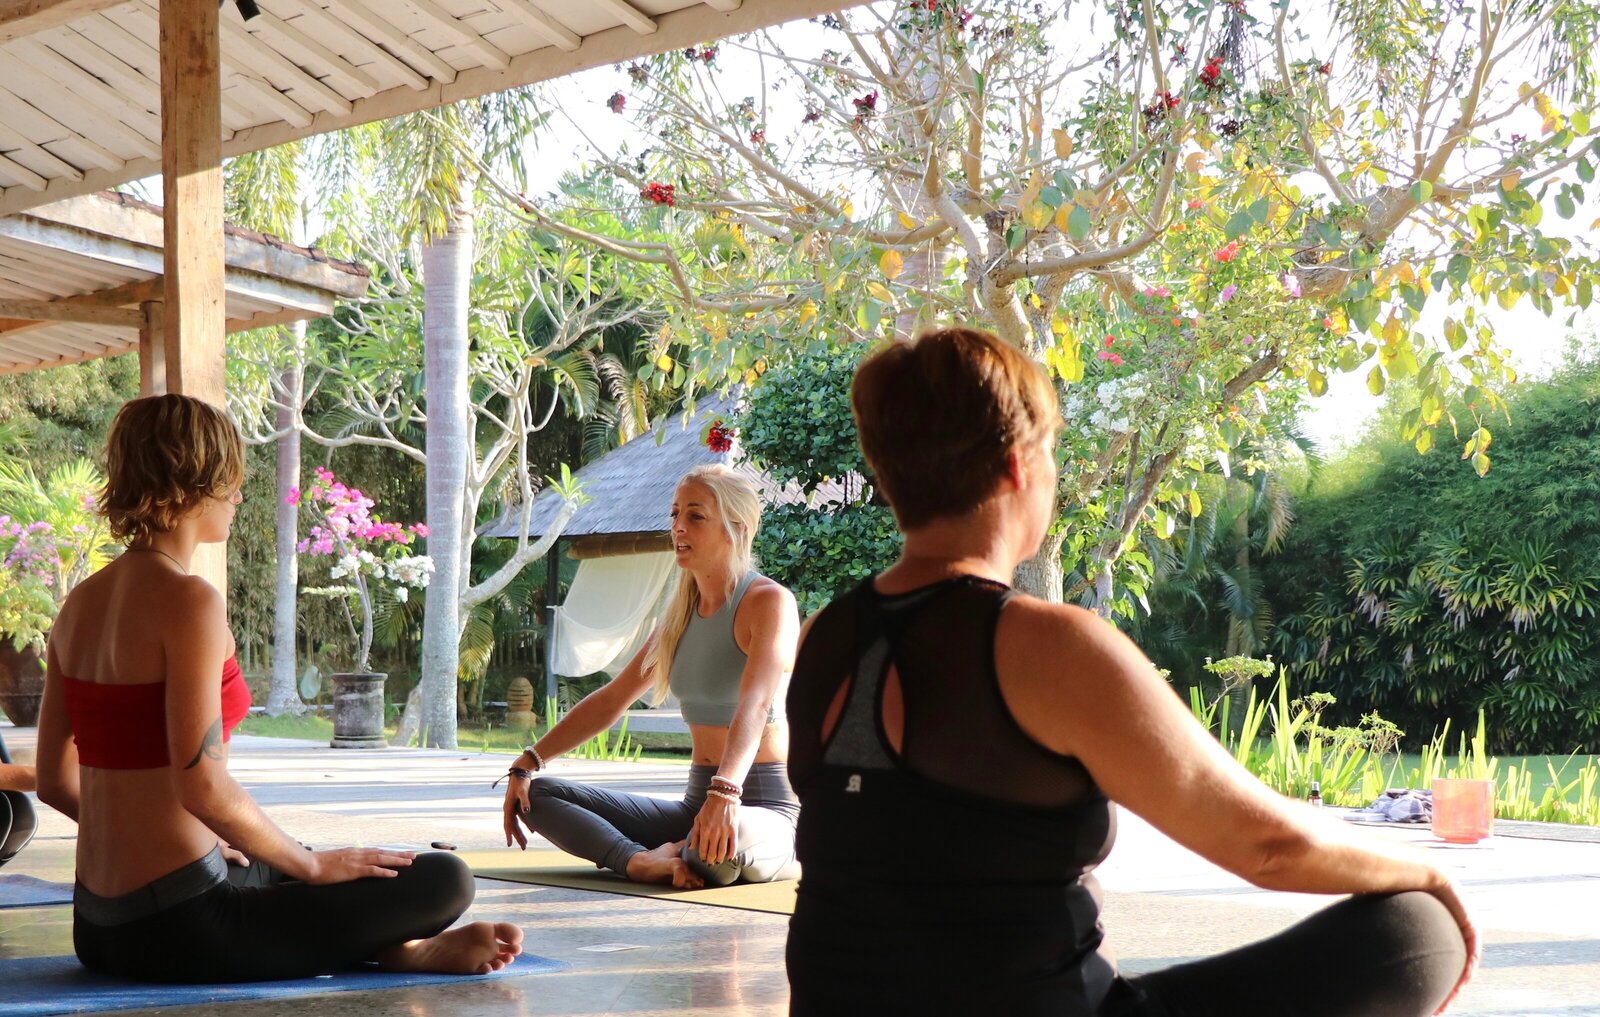 learn yoga in bali with yinside yoga bali retreats